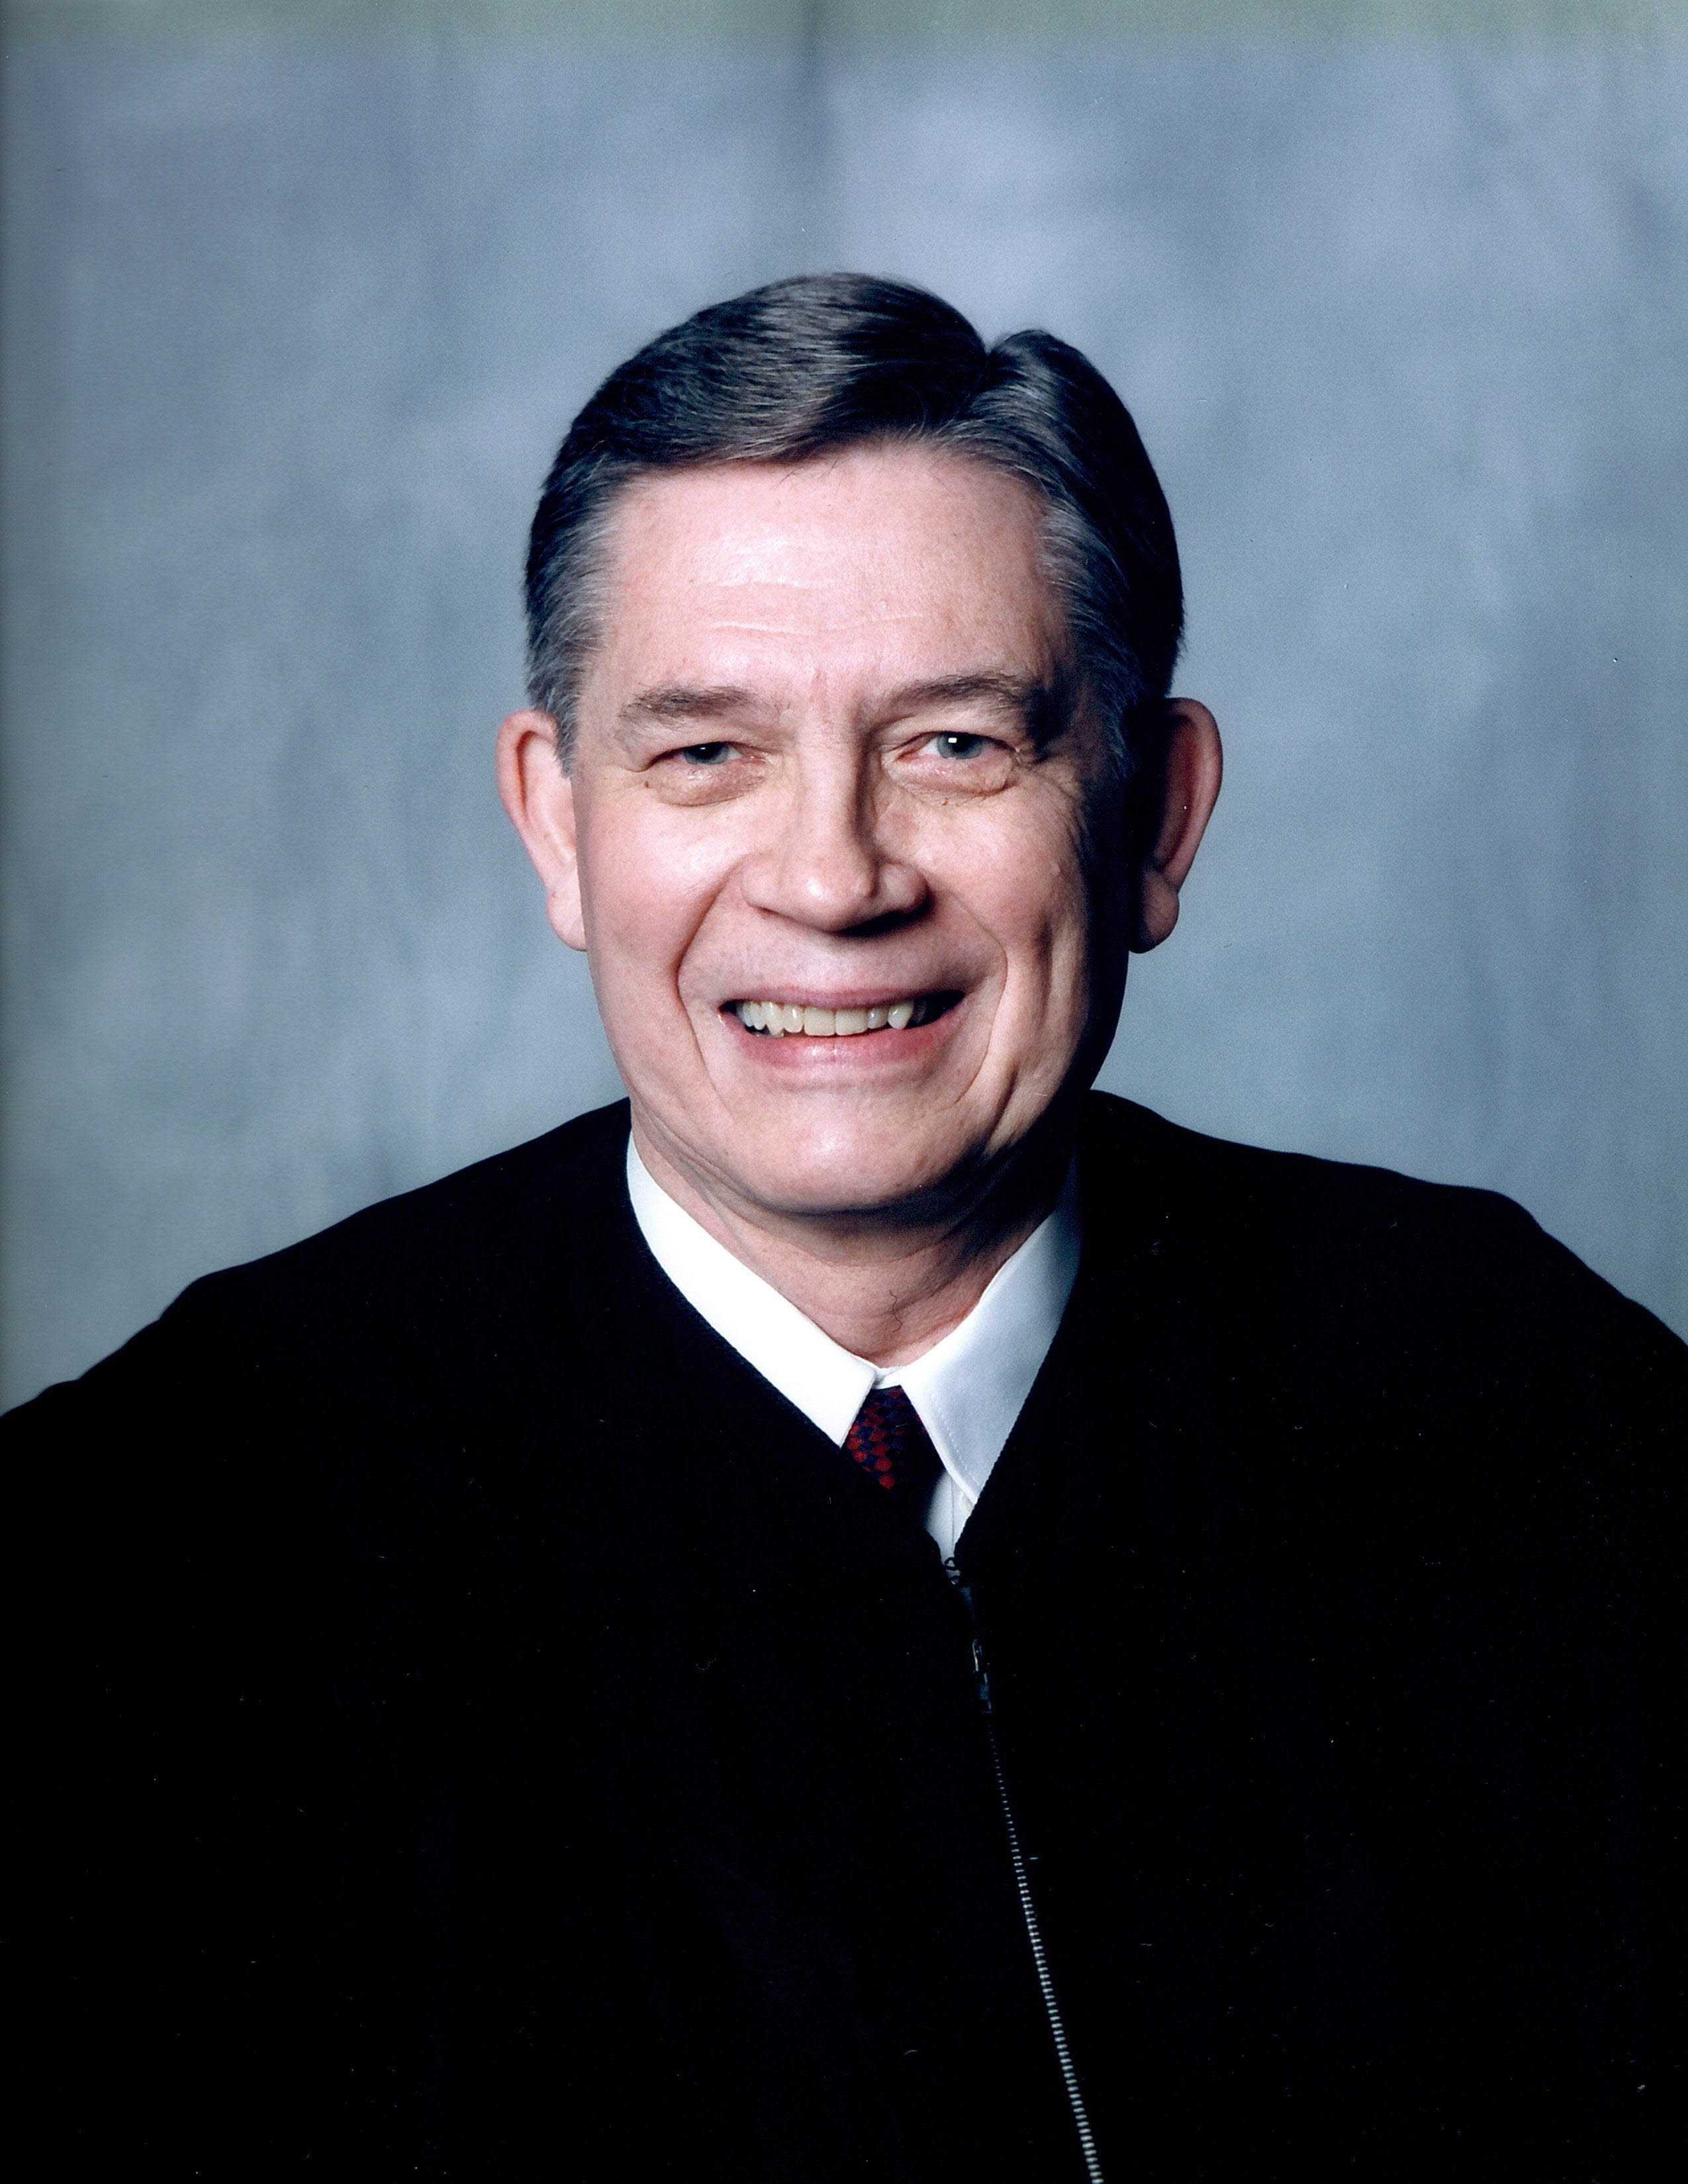 Former Justice Thomas L. Steffen